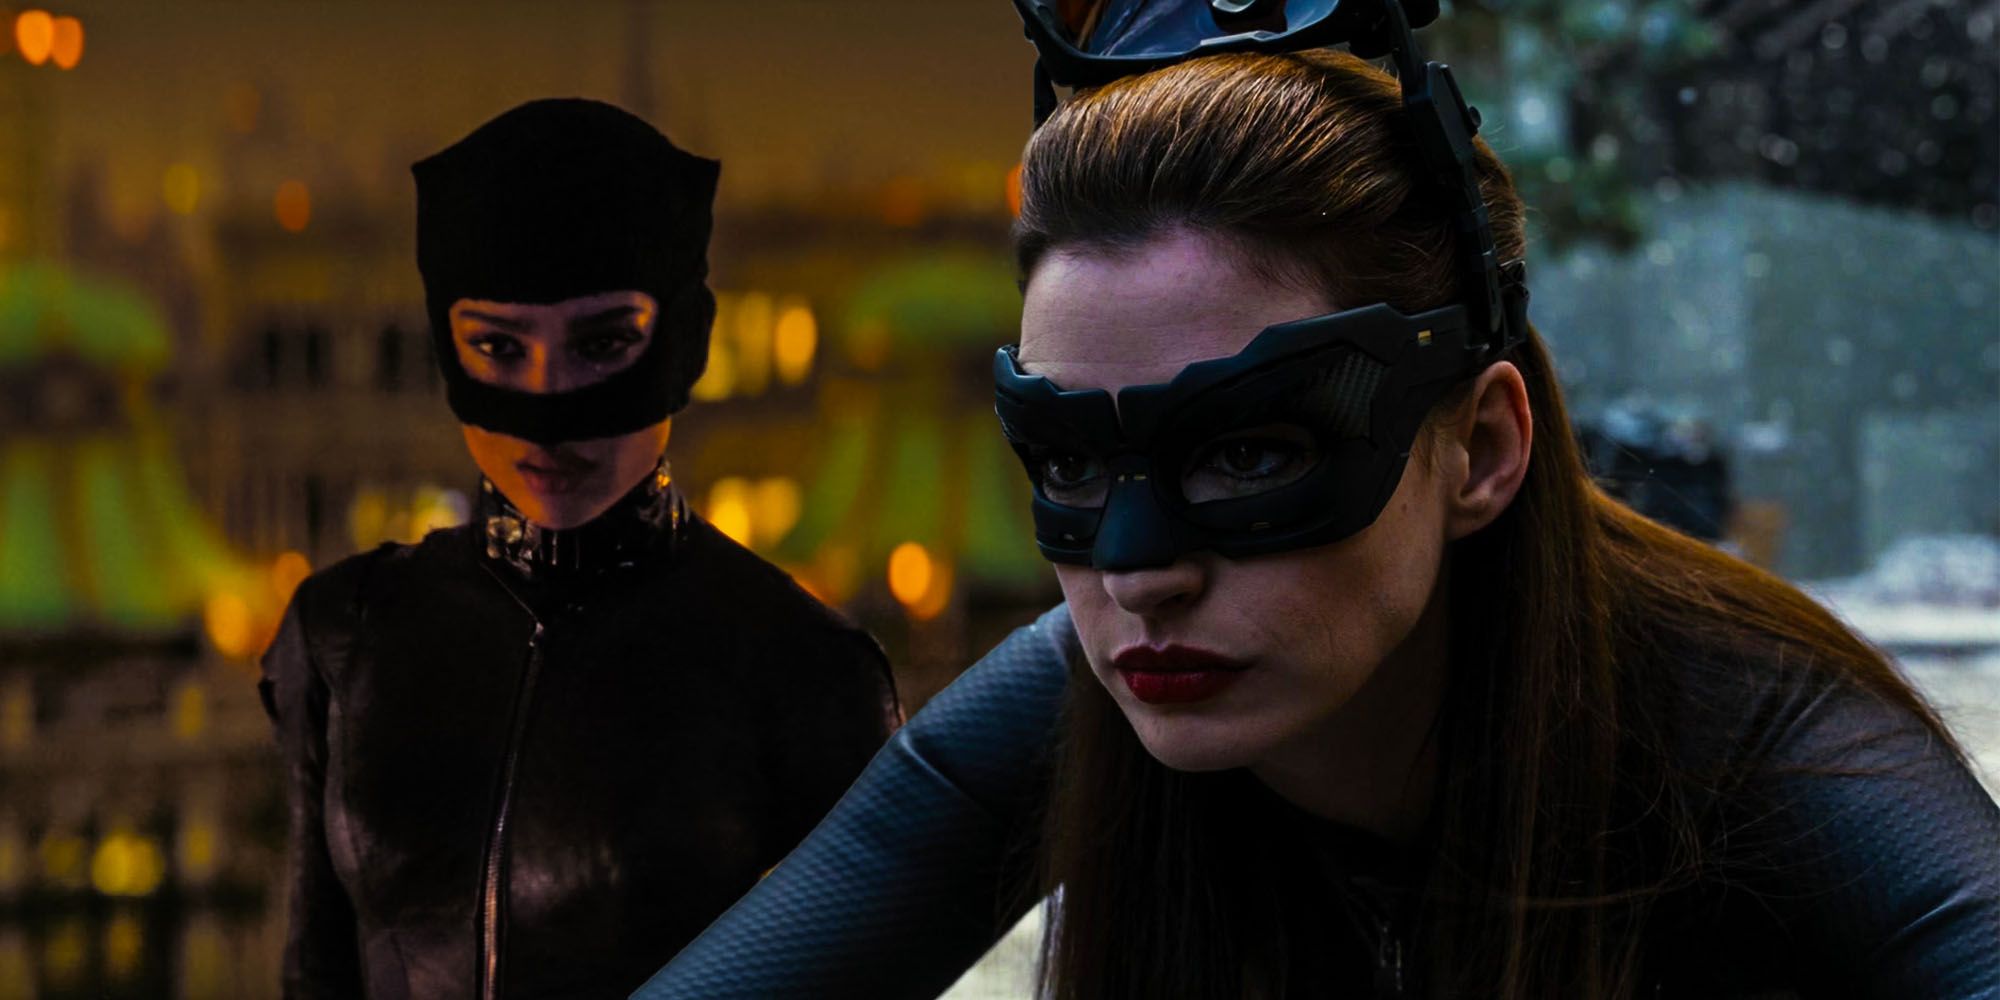 La Catwoman de Batman ya se ve mejor que The Dark Knight Rises